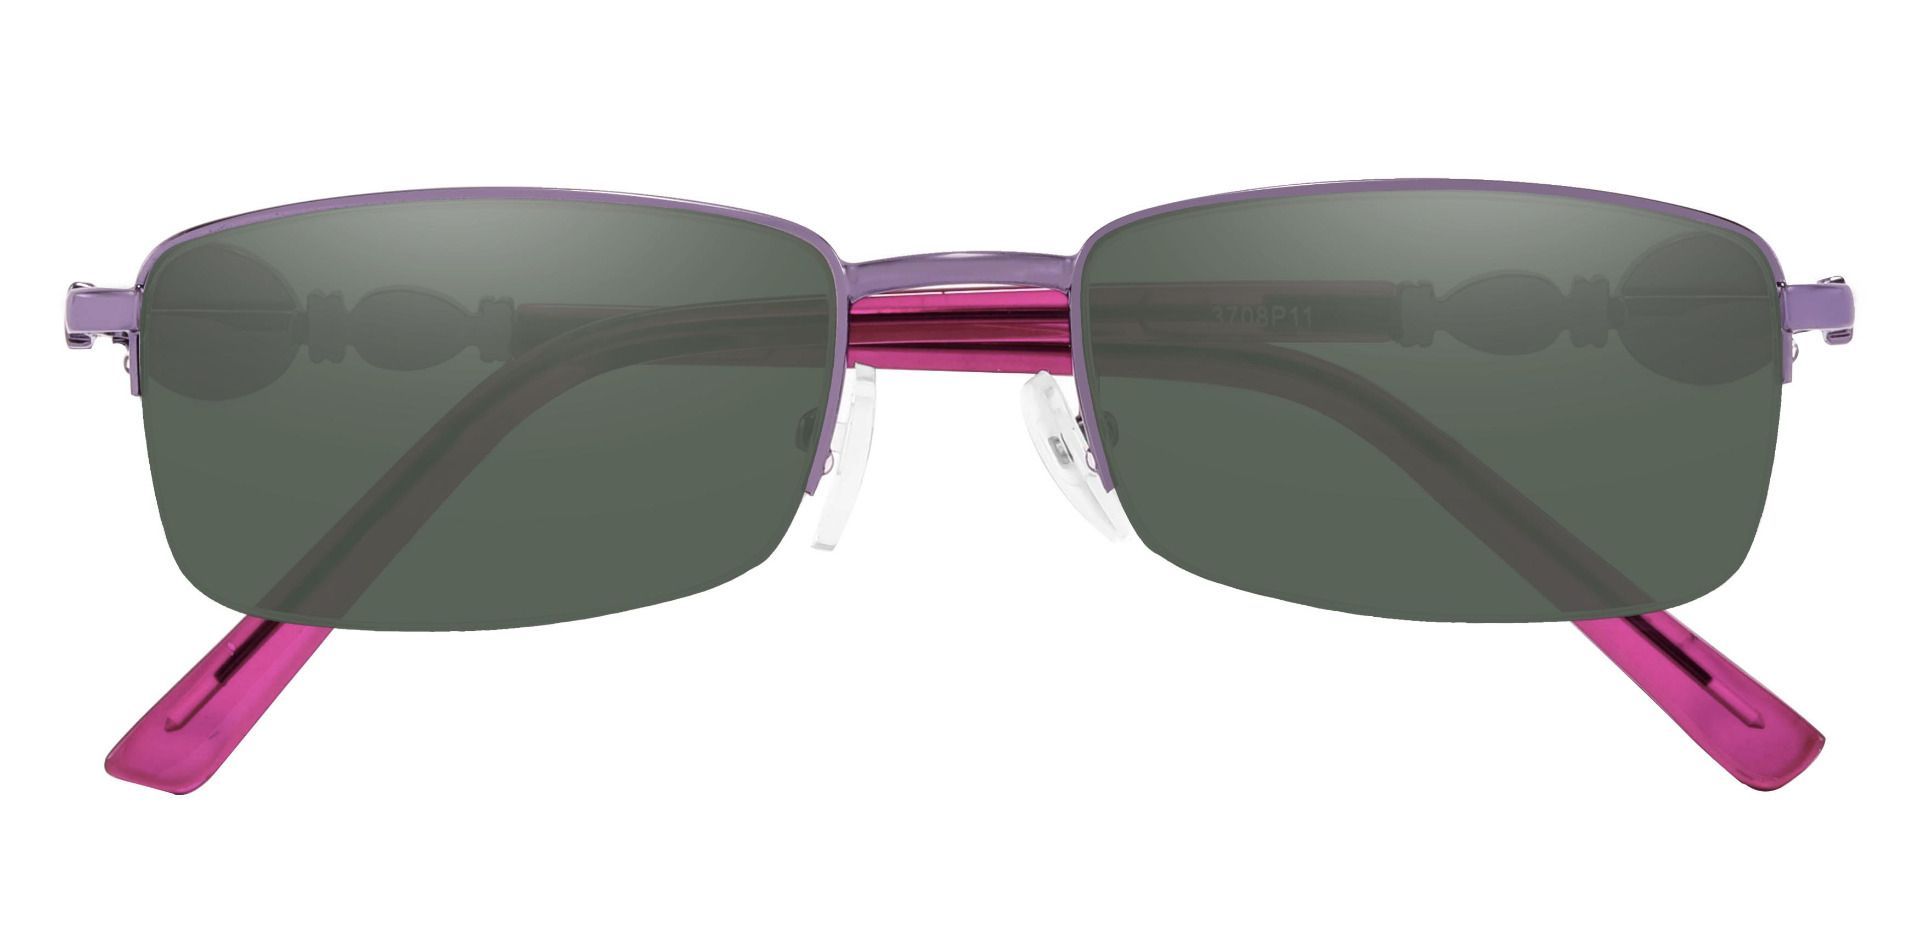 Crowley Rectangle Prescription Sunglasses - Purple Frame With Green Lenses